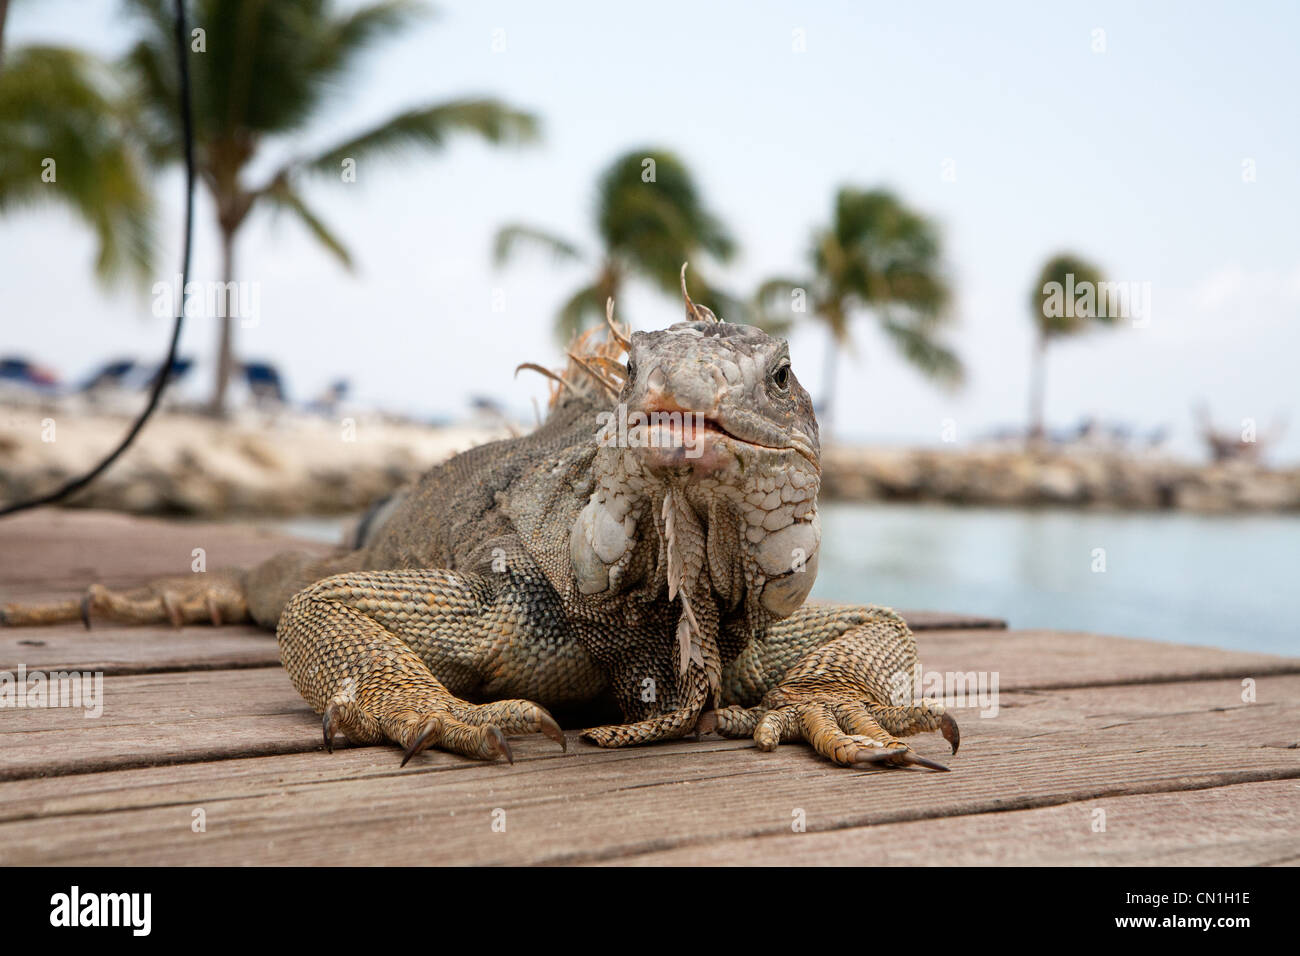 Reptiles lézard iguanes Aruba Banque D'Images